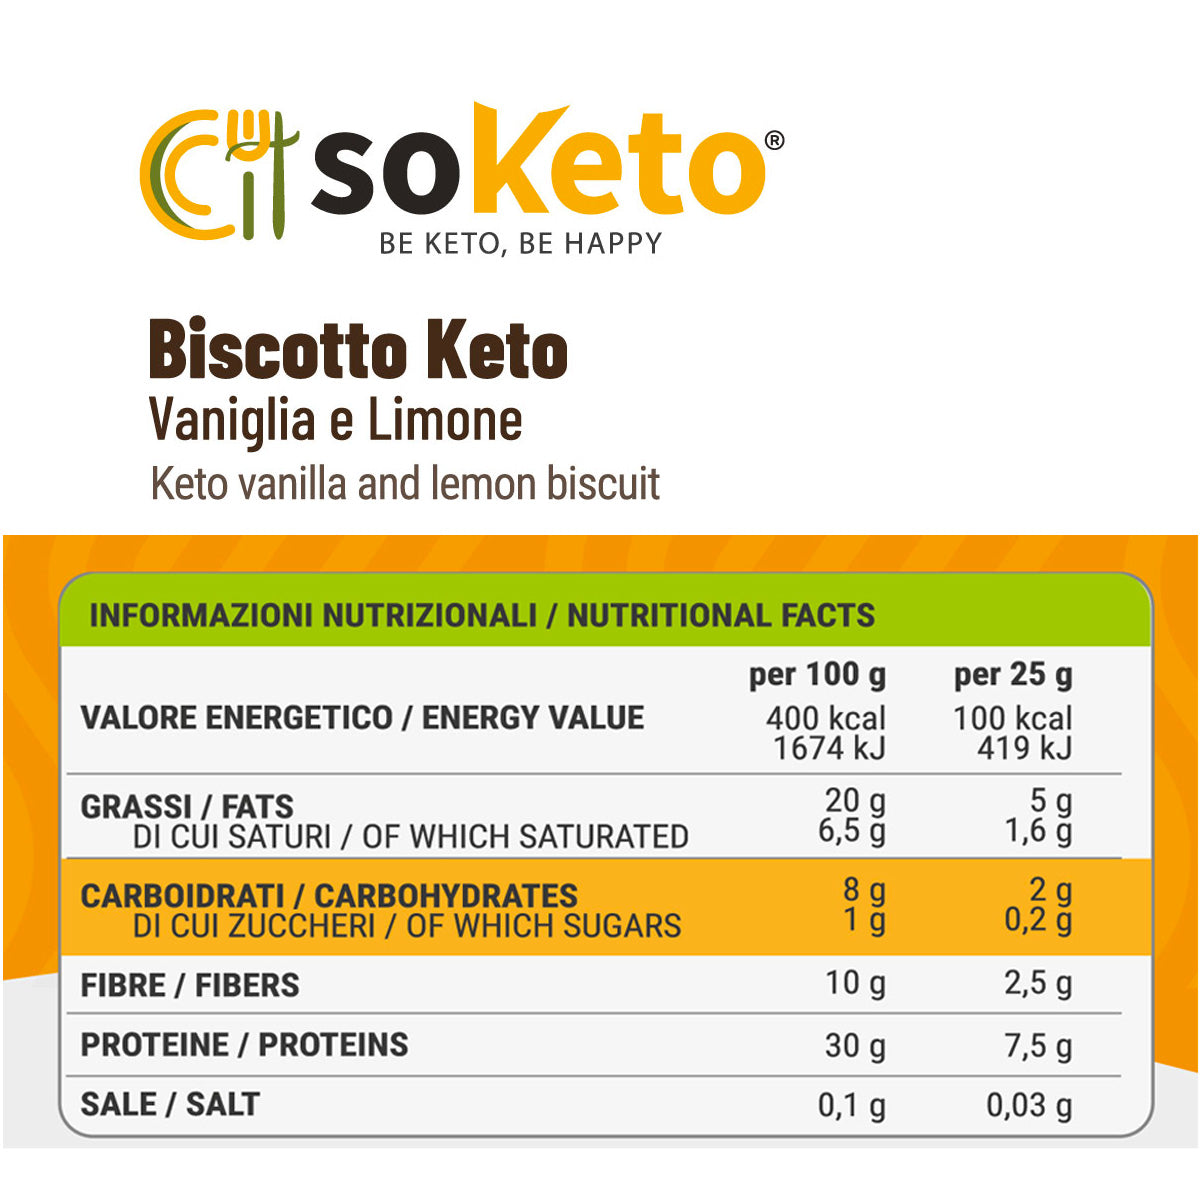 Biscuits Keto Vanille et Citron (50g)